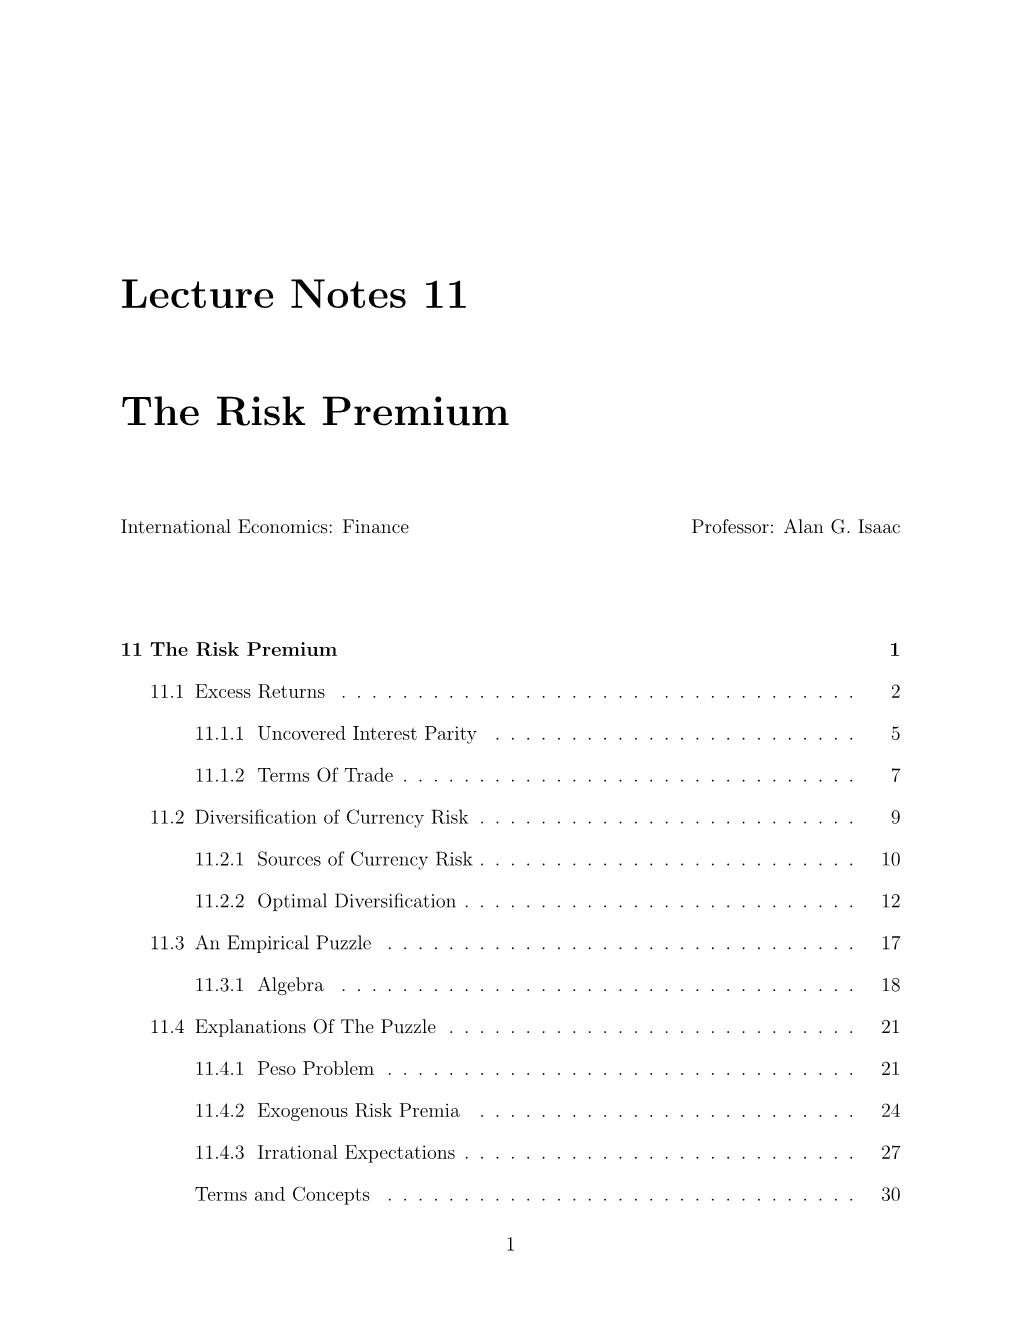 Lecture Notes 11 the Risk Premium